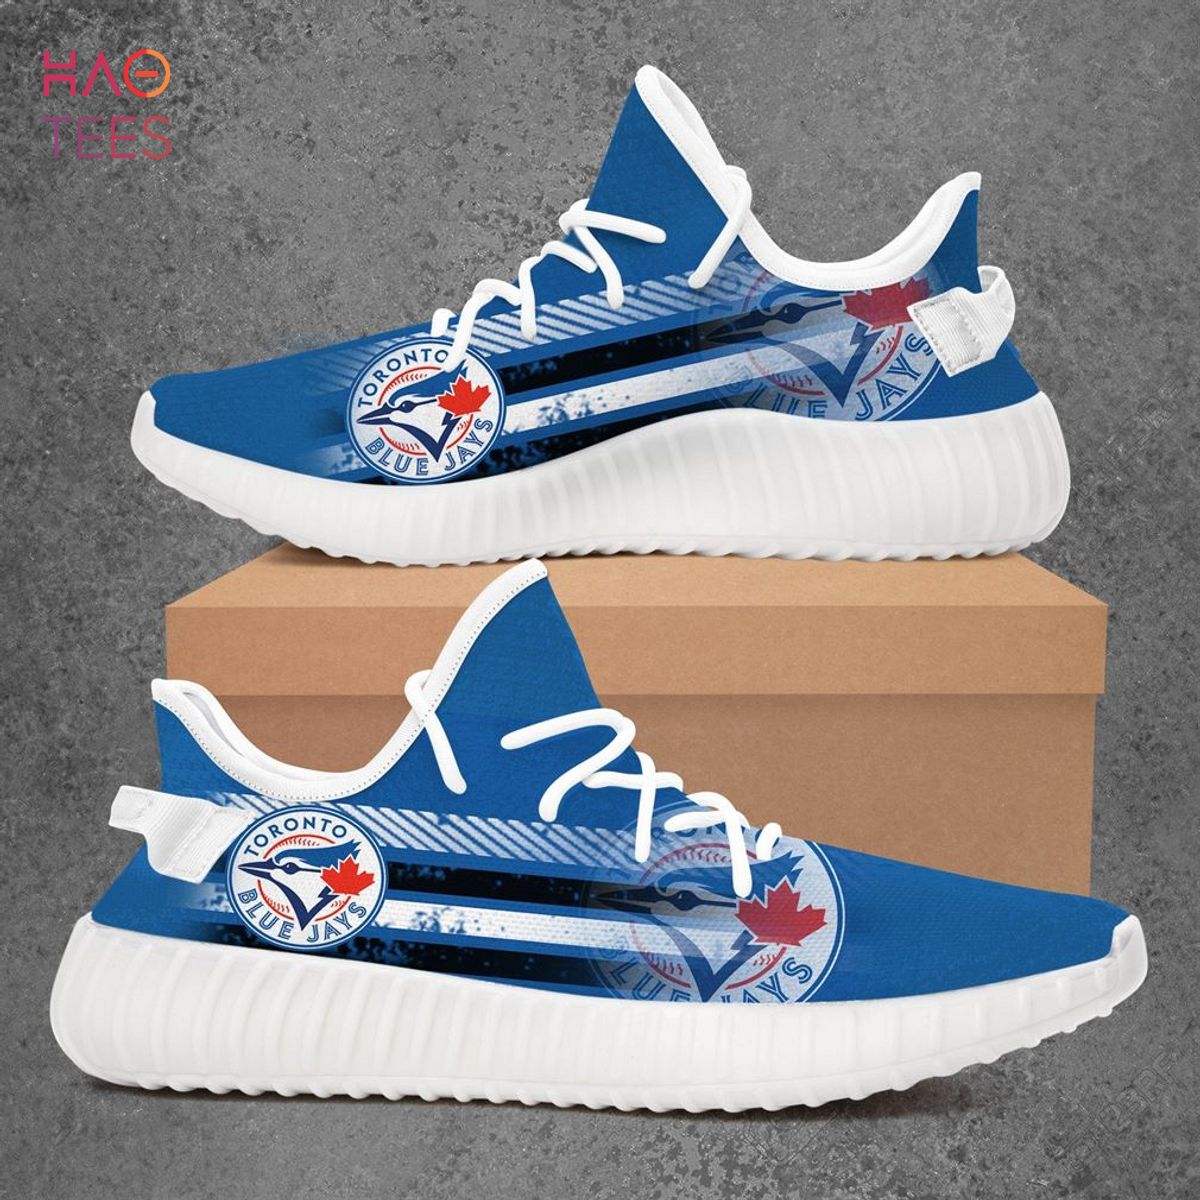 [TRENDDING] Toronto Blue Jays Mlb Baseball Yeezy Sneakers Shoes